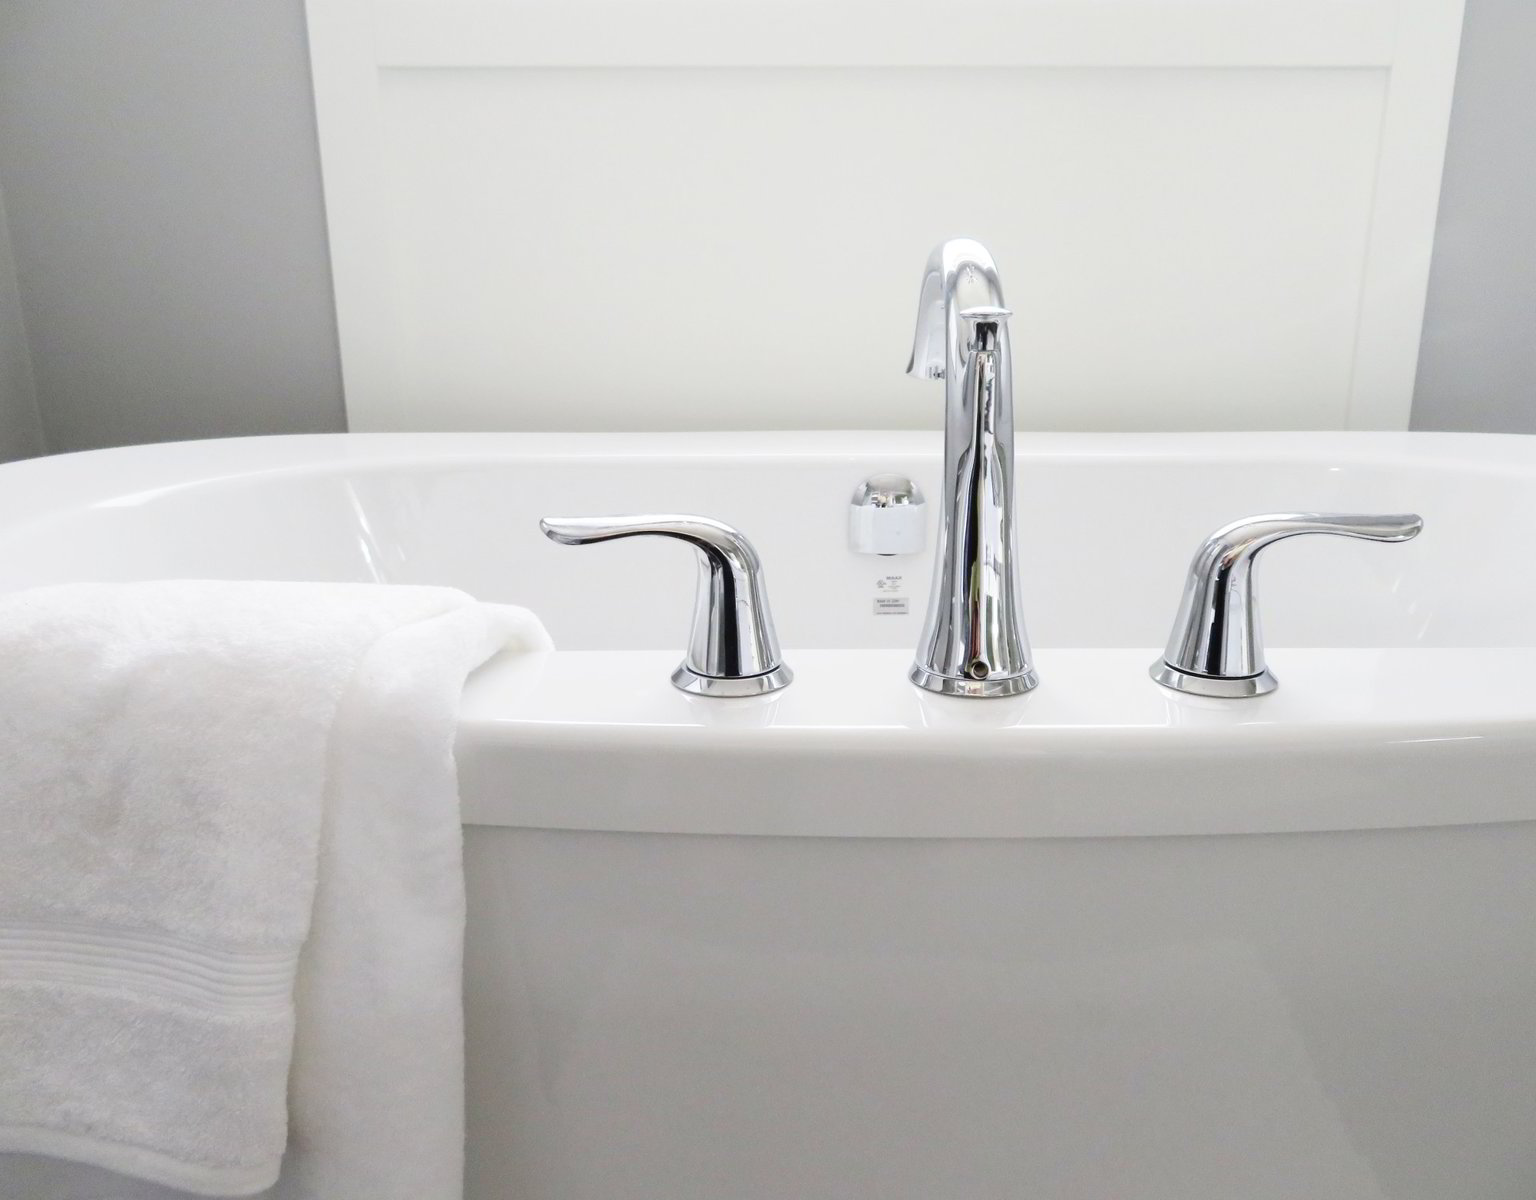 How To Fix A Leaky Bathtub Faucet, Bathtub Valve Leaking